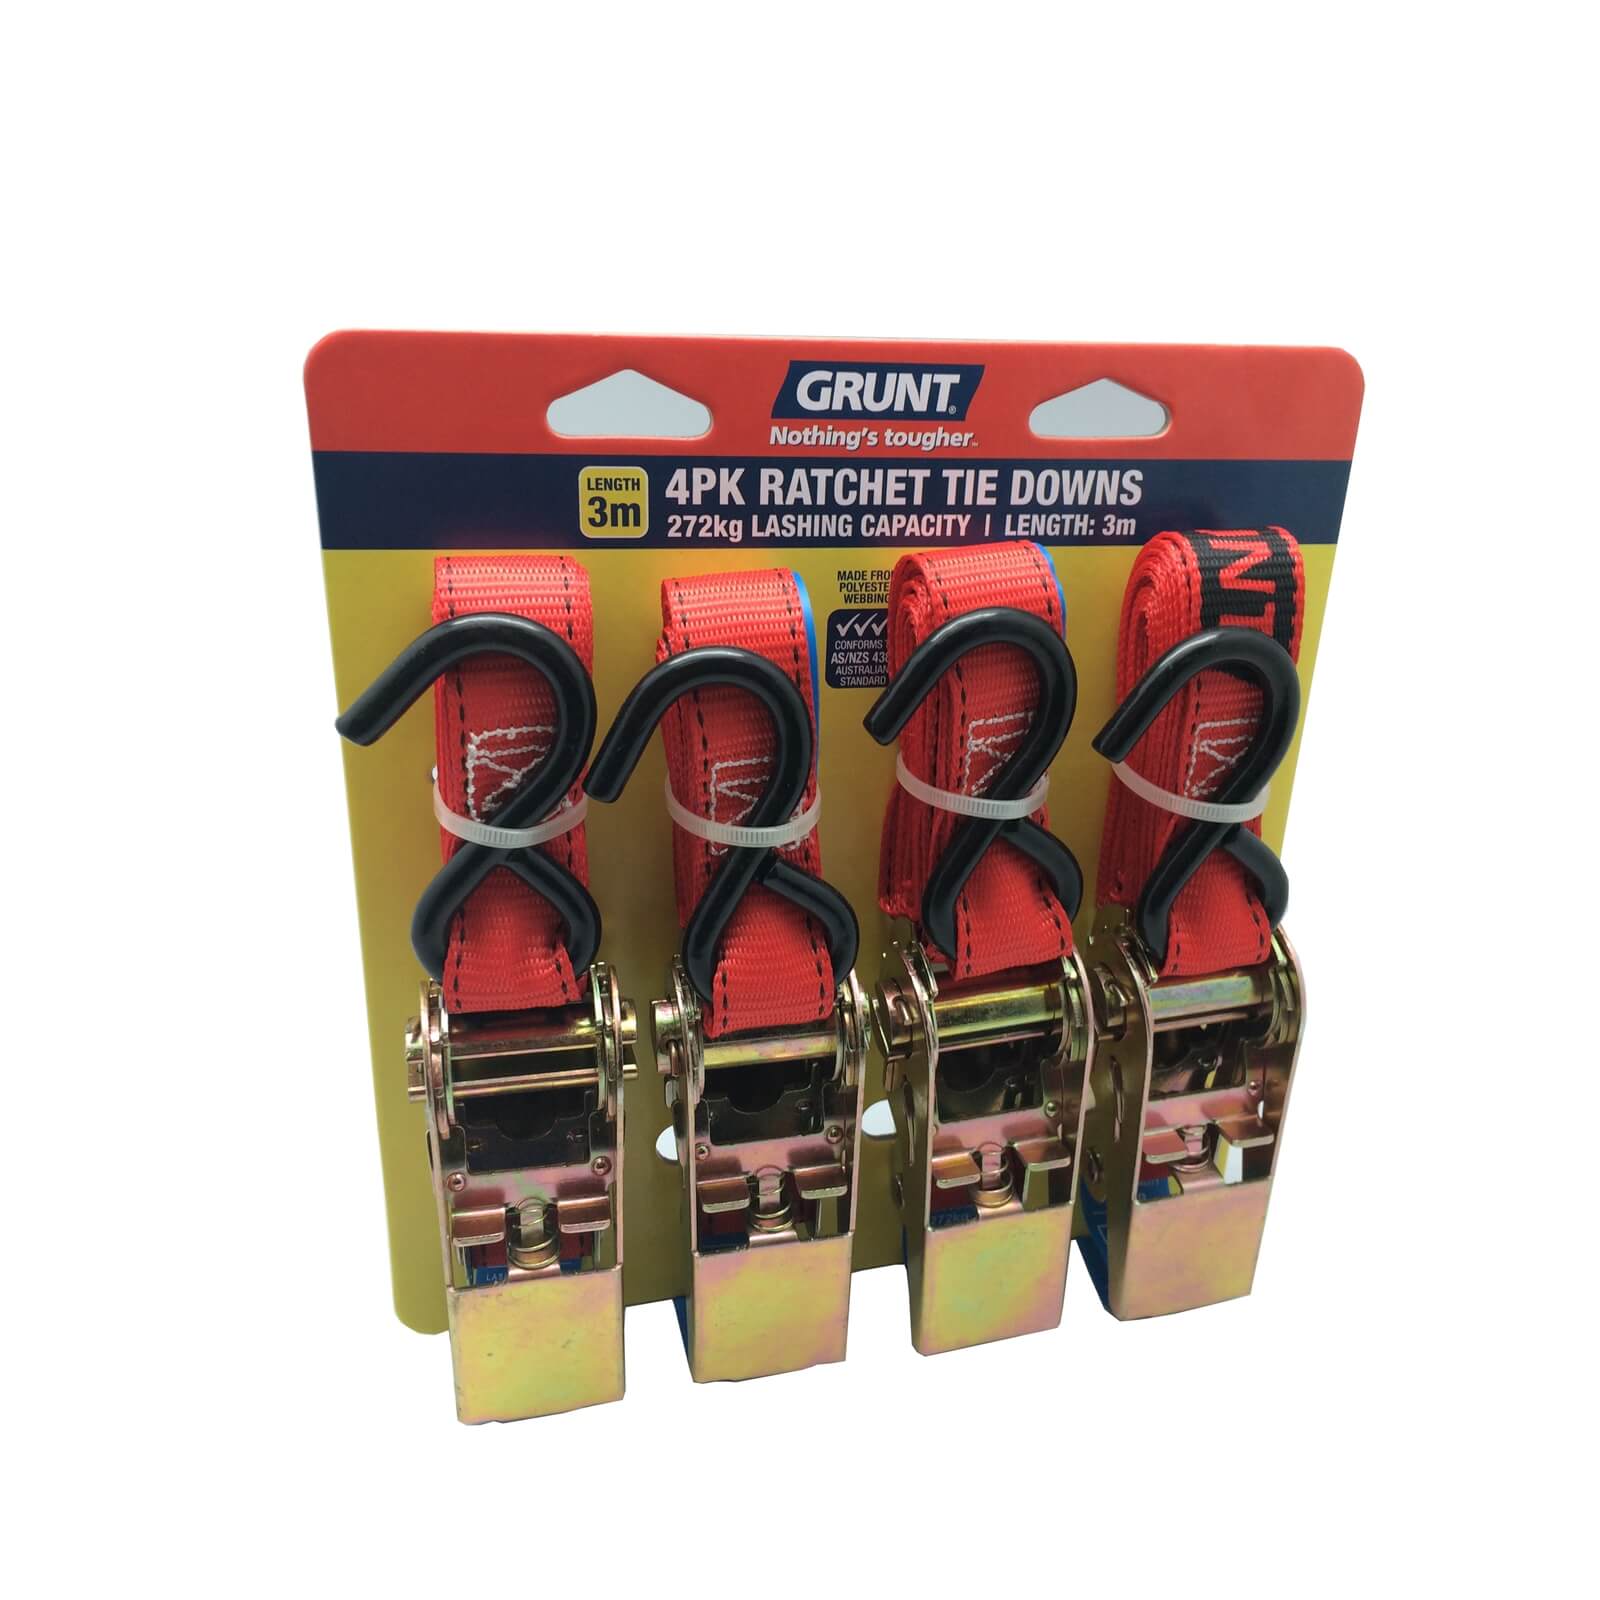 Grunt Ratchet Tie Down 25mm x 3m - 4 Pack